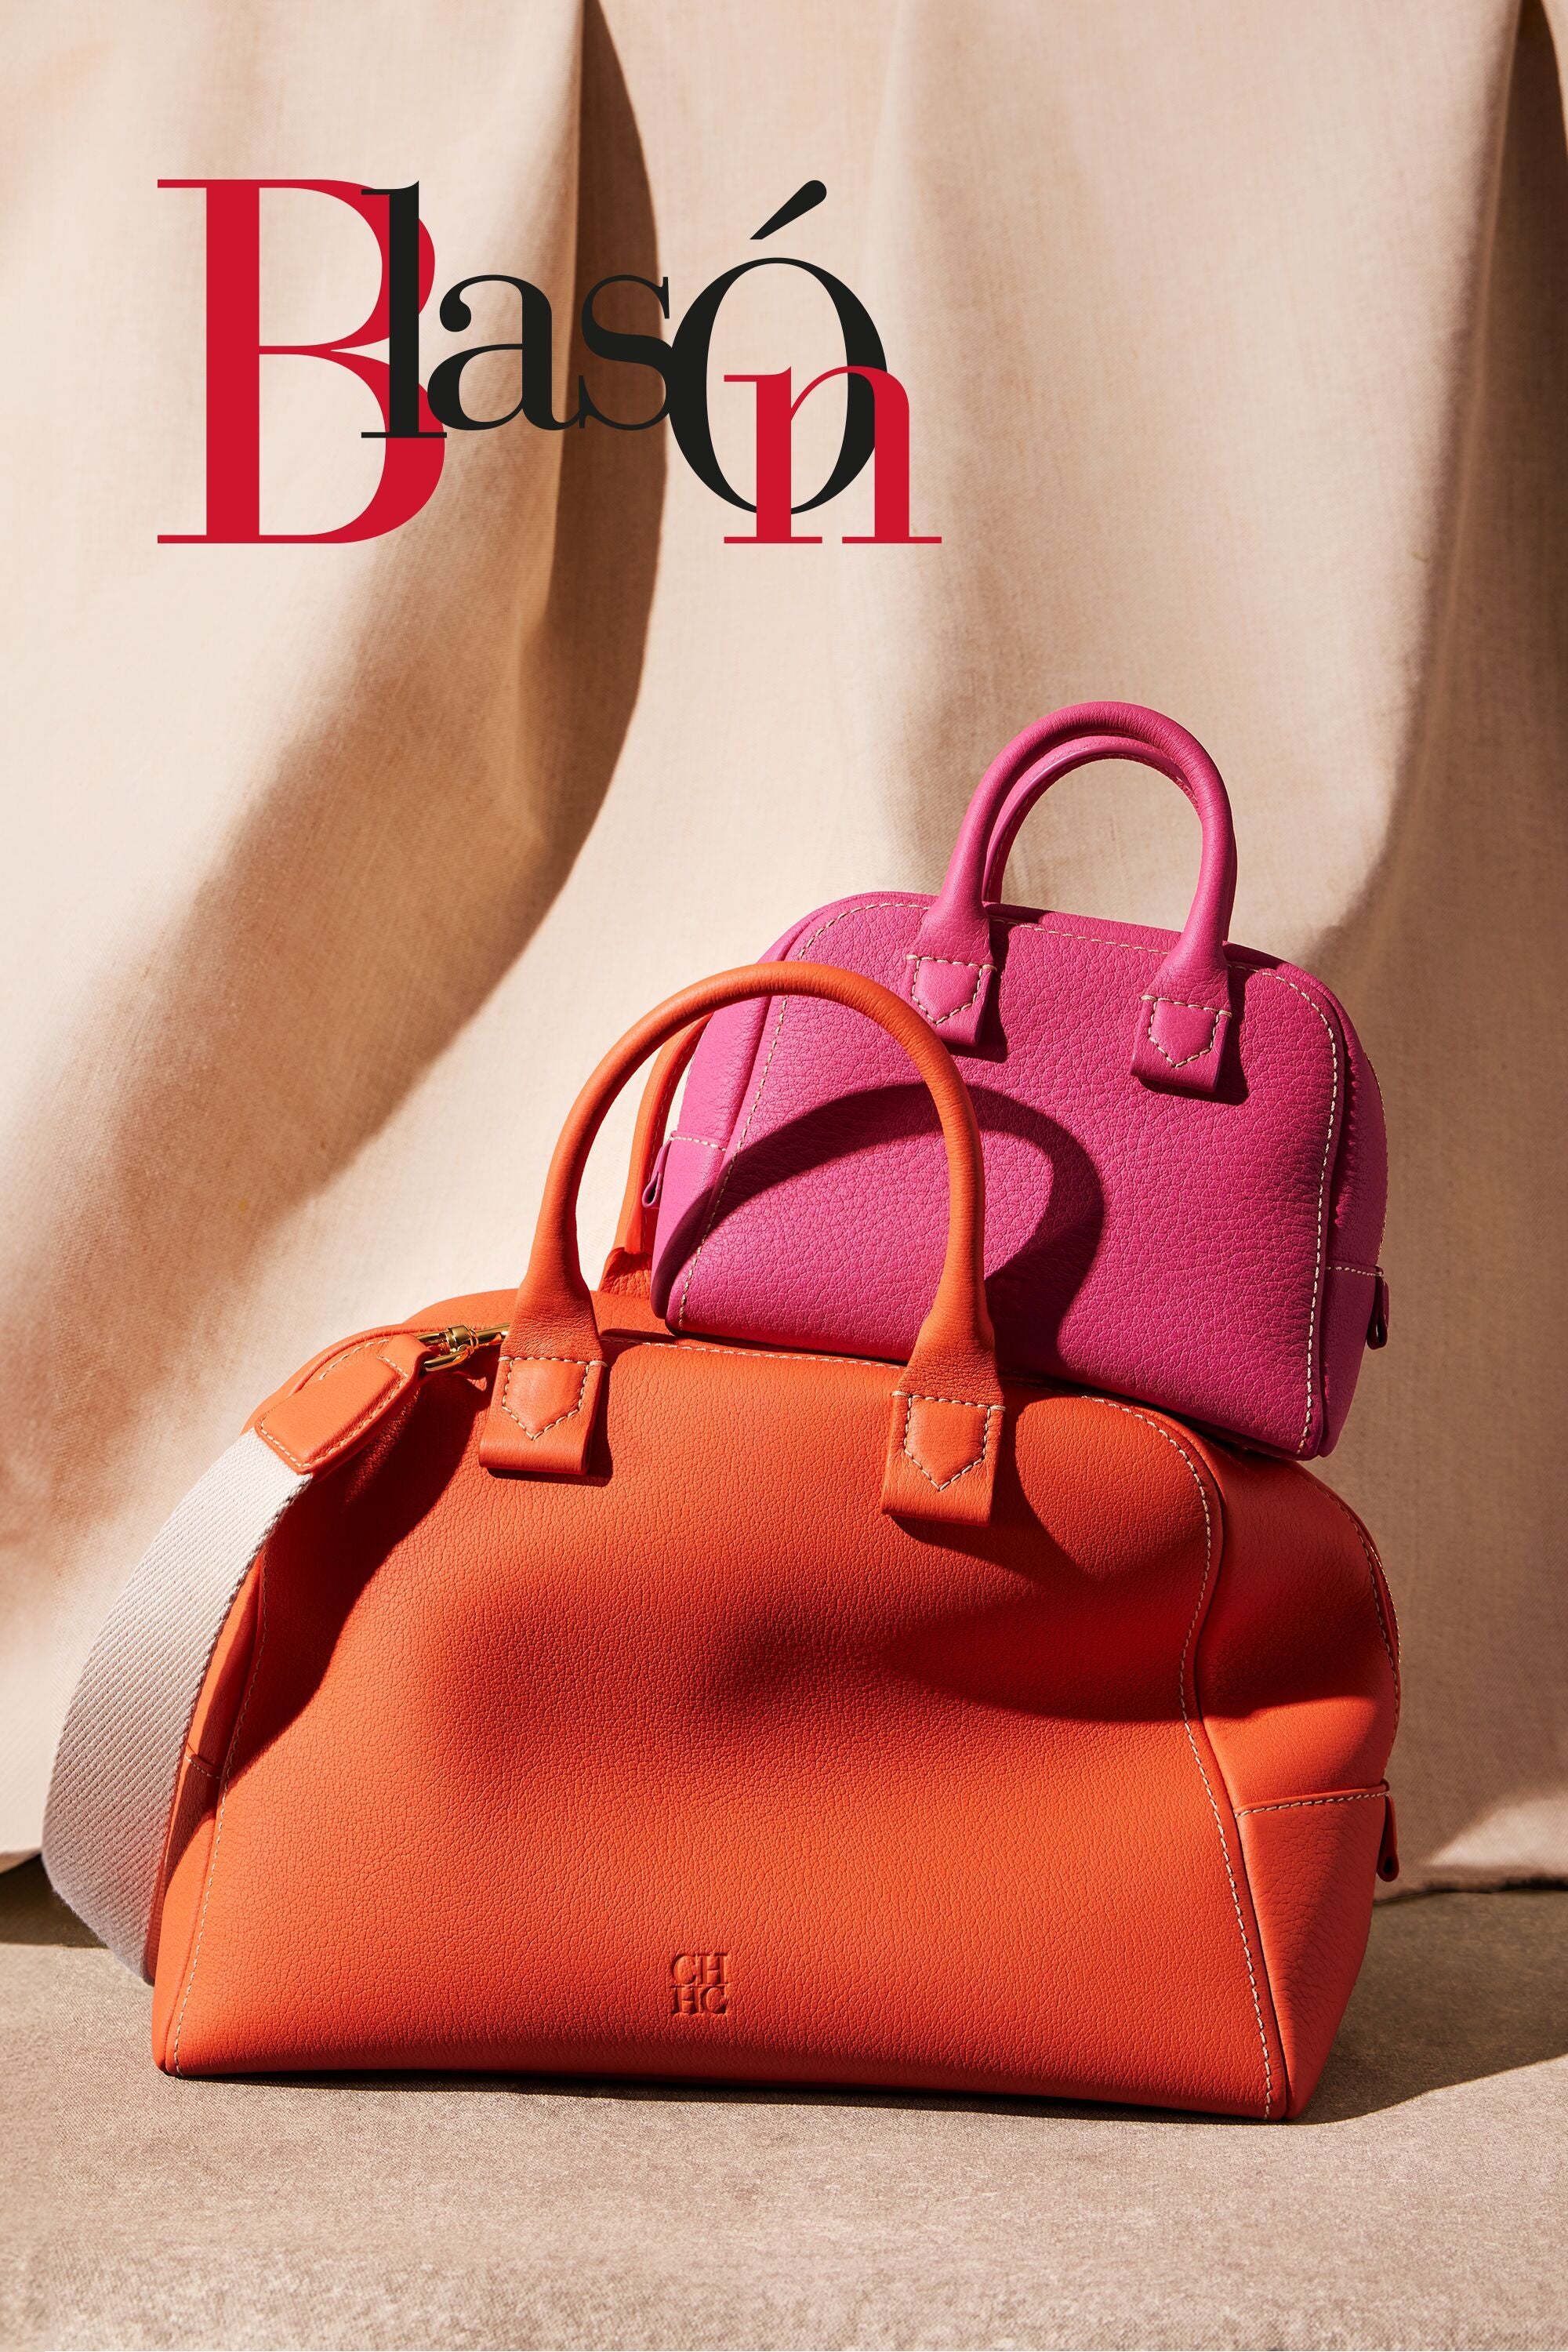 Women's Handbags | Amazon.com